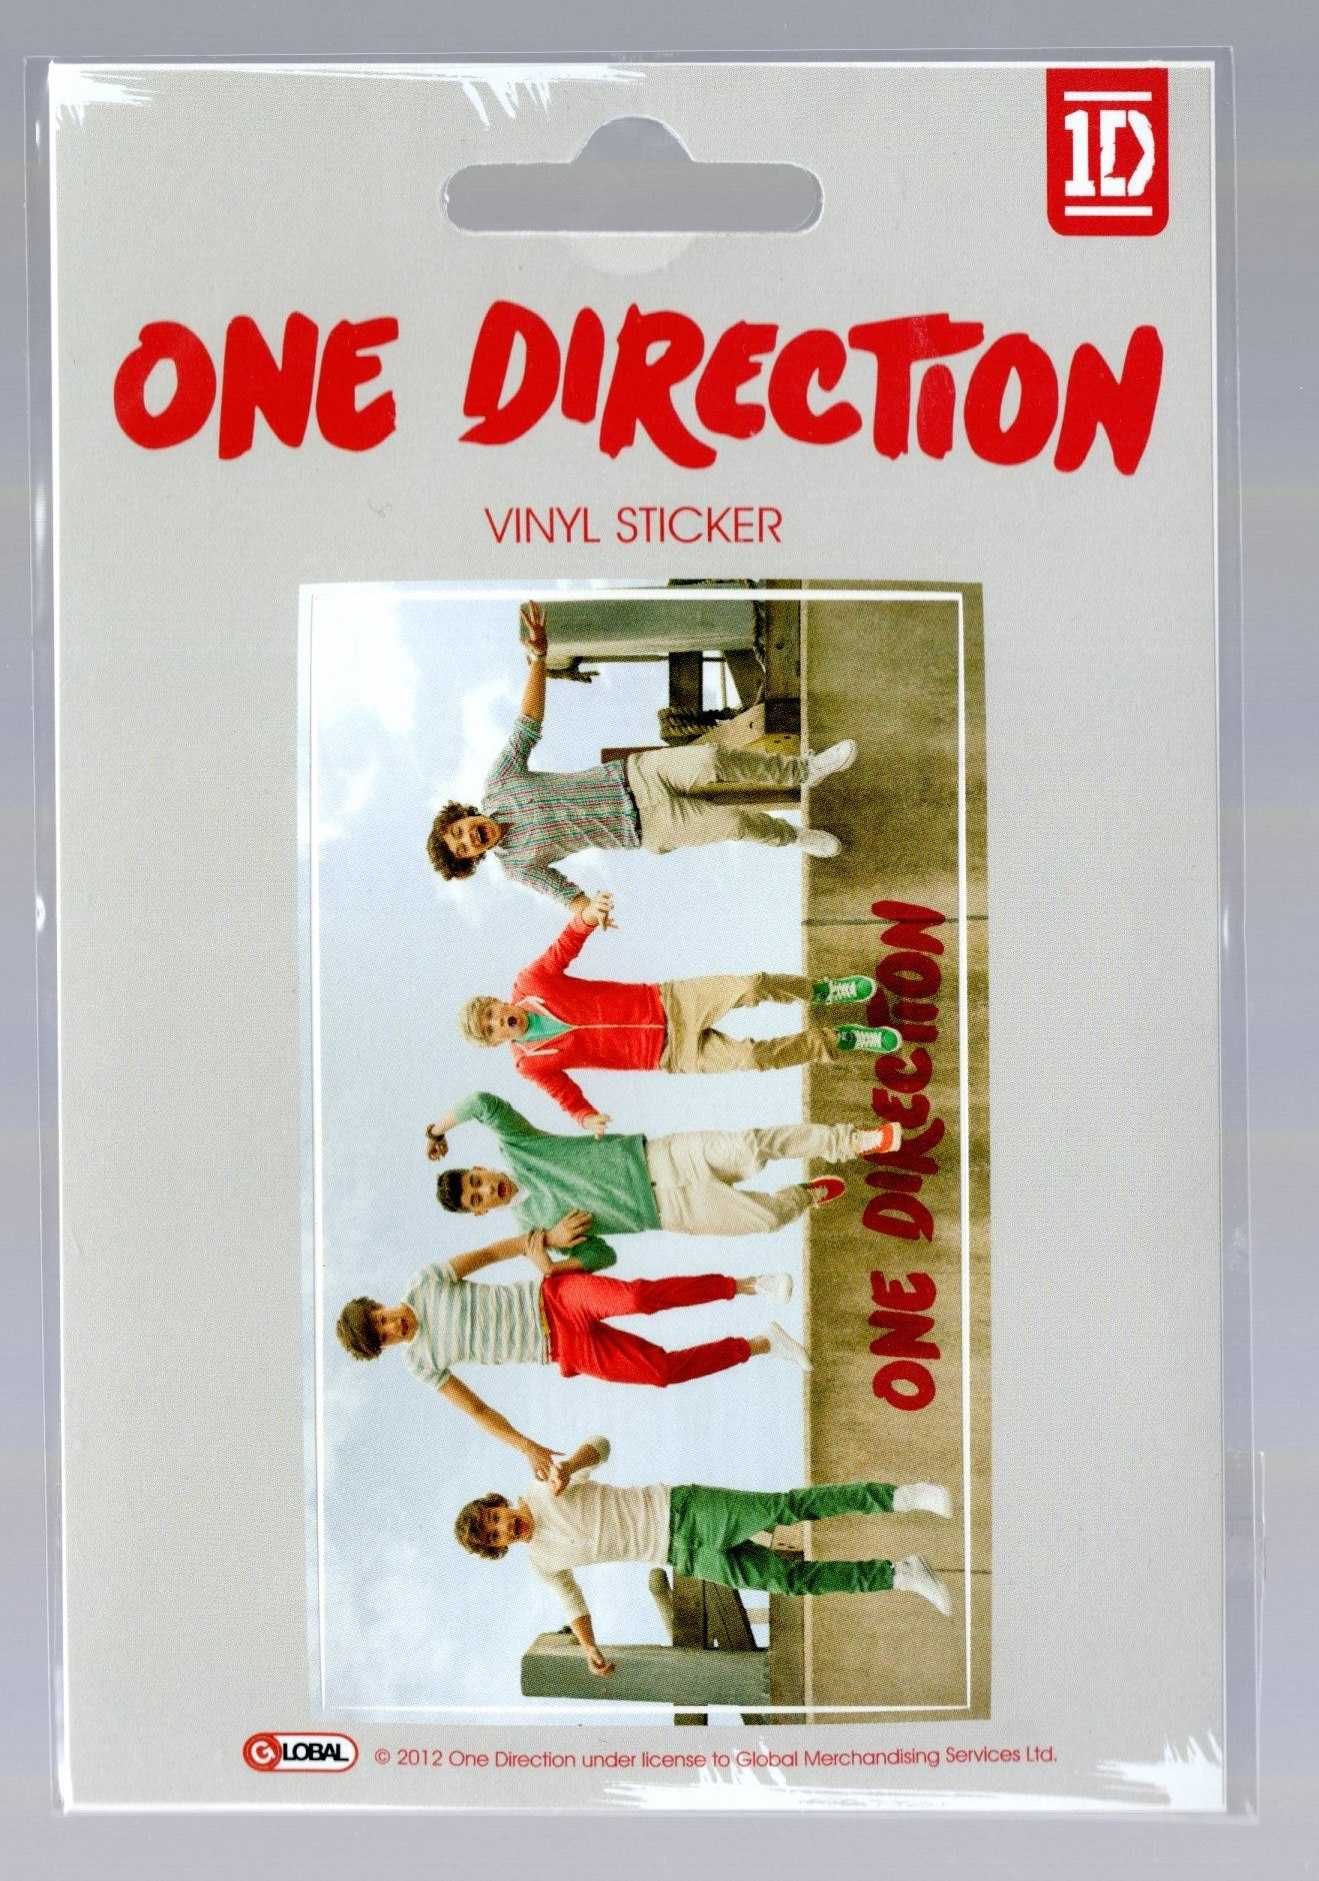 One Direction Jumping - naklejka winylowa 9,5 x 5,5 cm